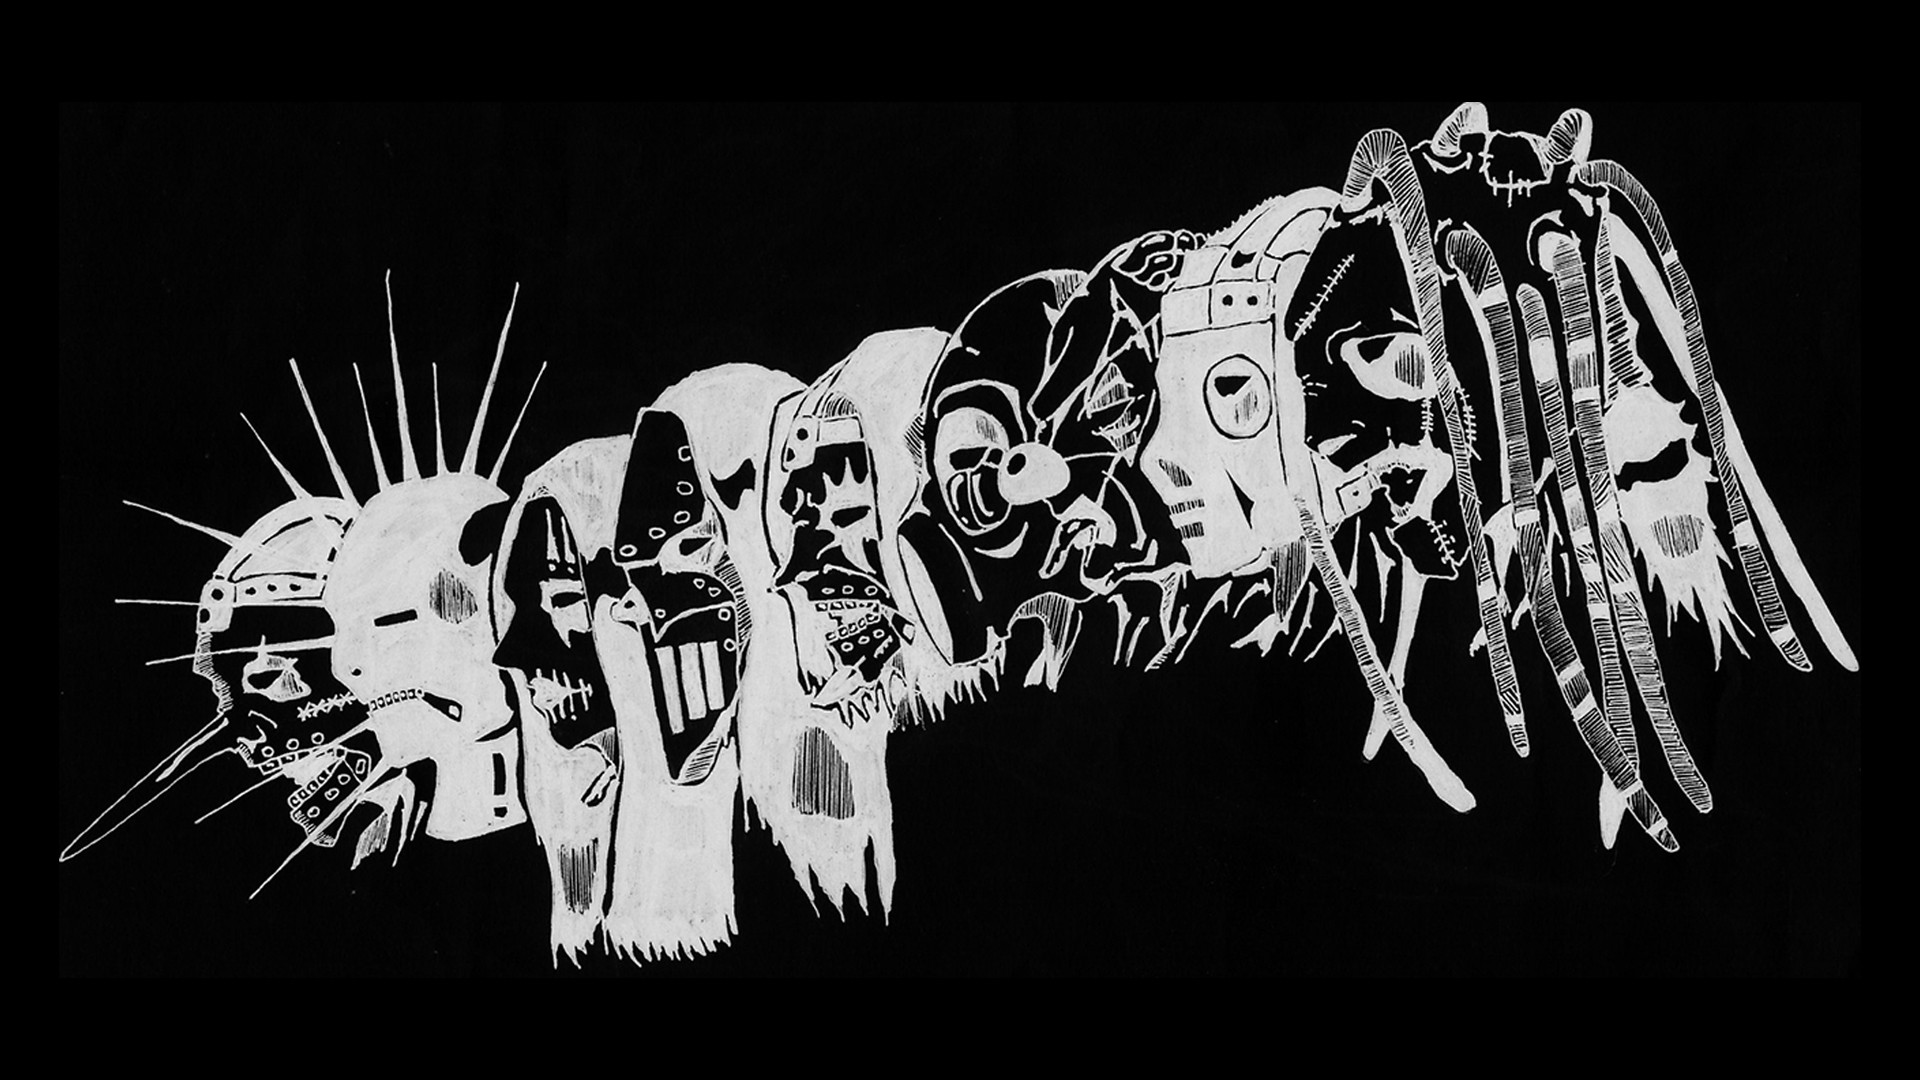 Music Heavy Metal slipknot band Corey Taylor wallpaper 1920x1080